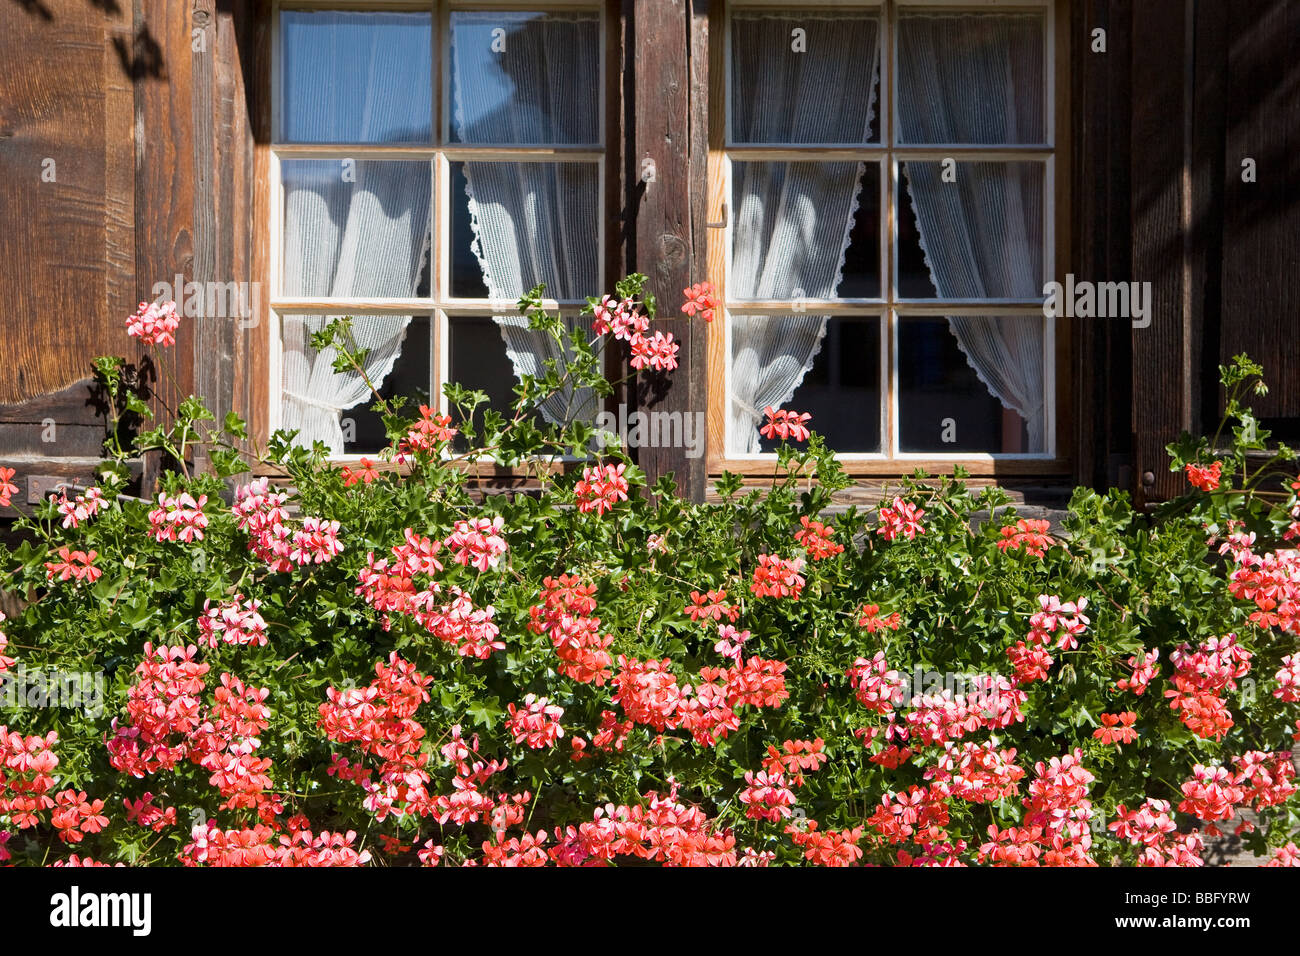 Gerani rosa in una finestra di una casa in legno di vals Foto Stock